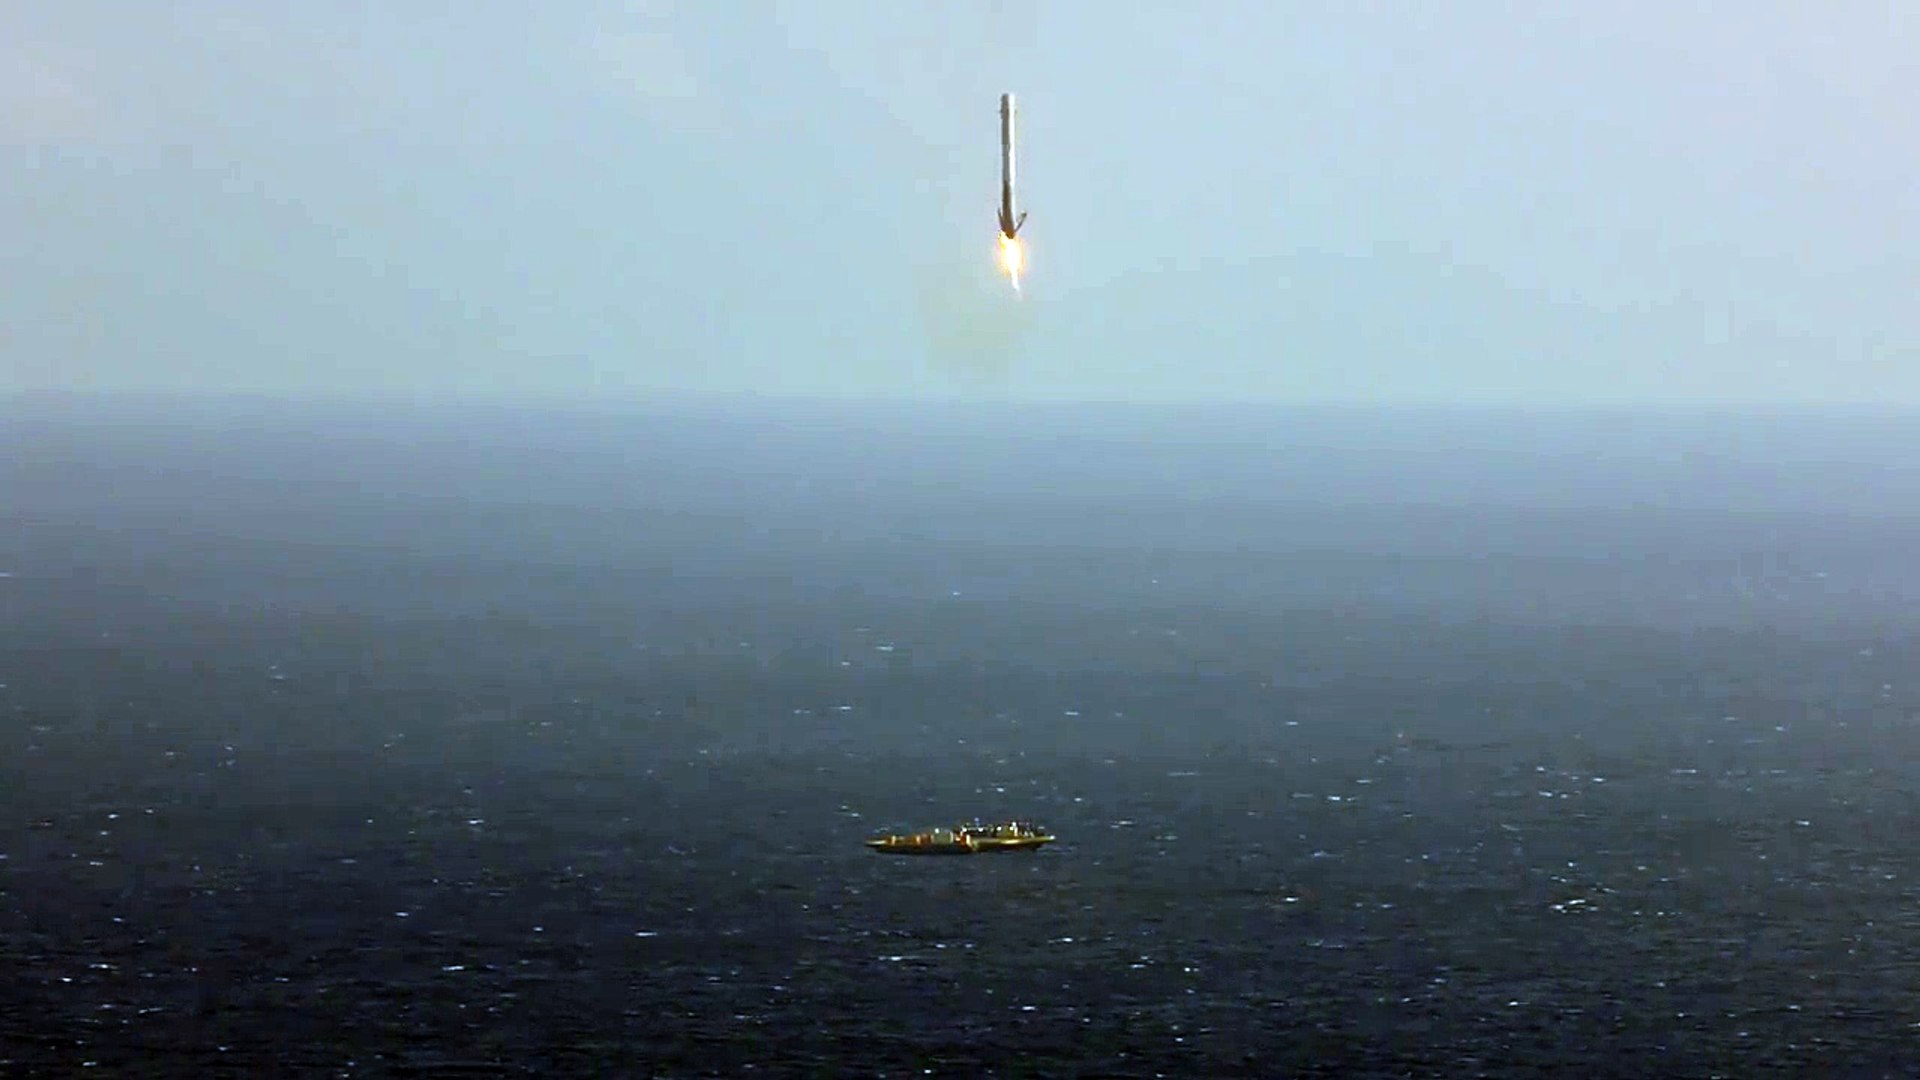 Scott Manley landing an actual SpaceX rocket